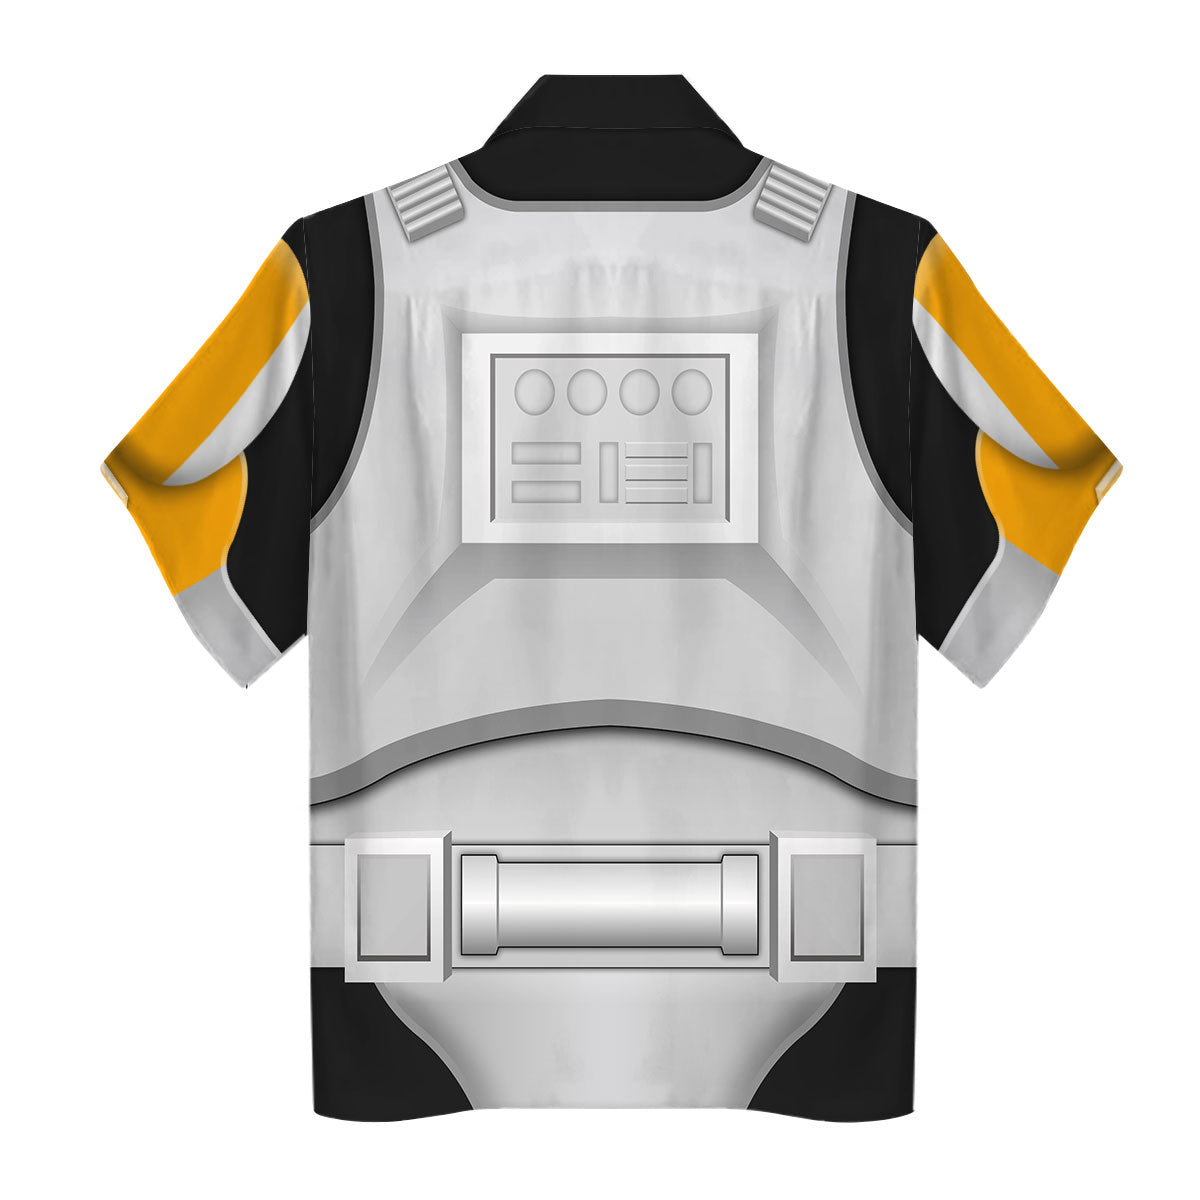 Star Wars Clone Trooper Commander Costume - Hawaiian Shirt